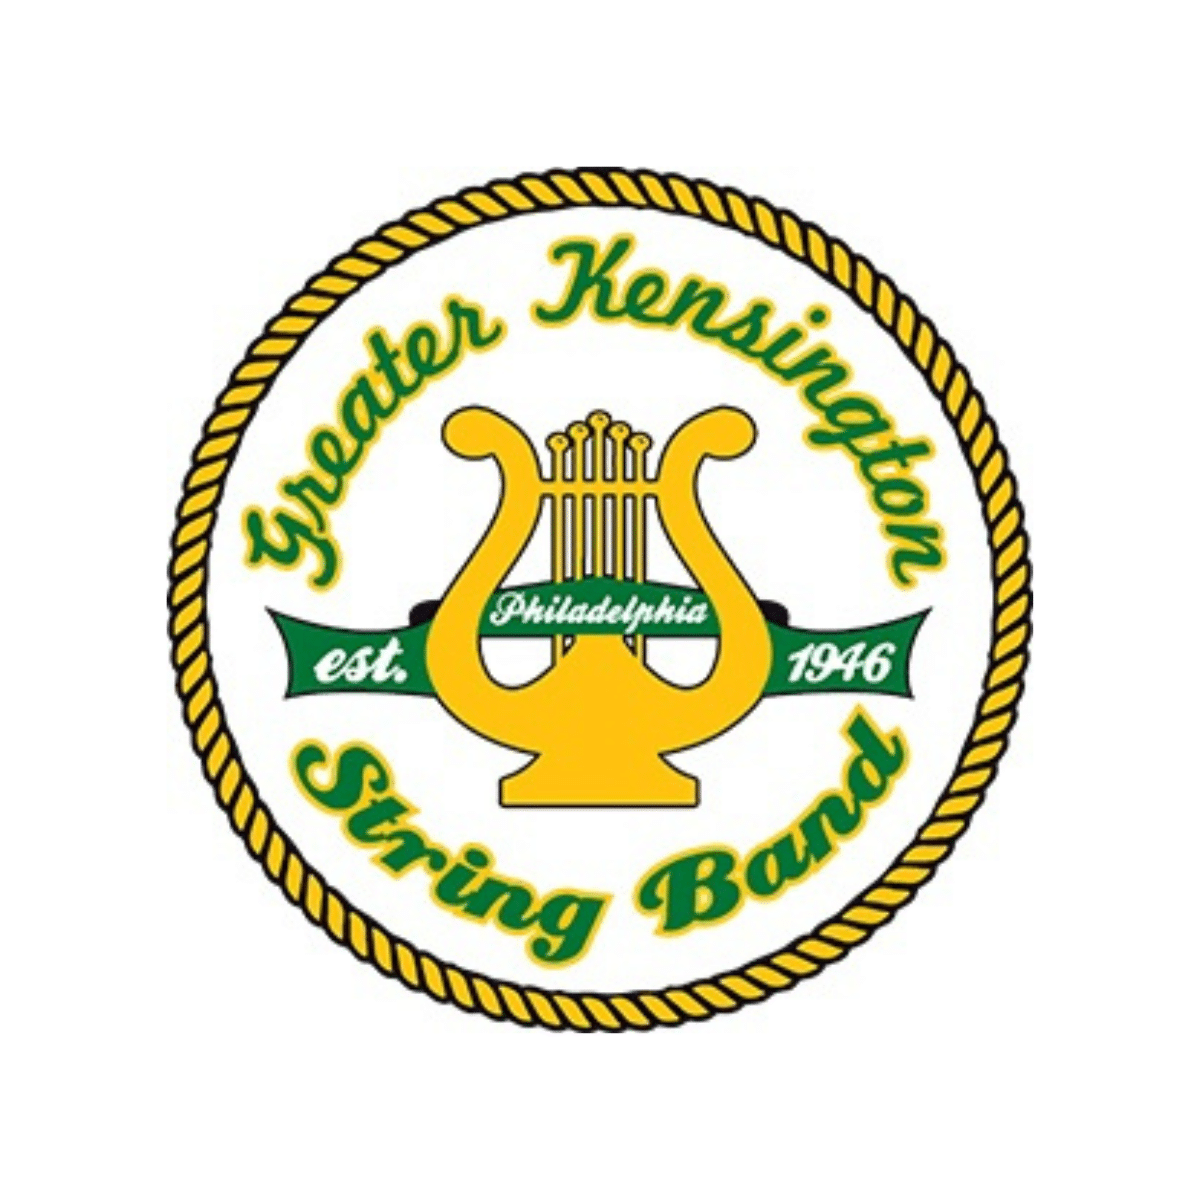 Greater Kensington String Band